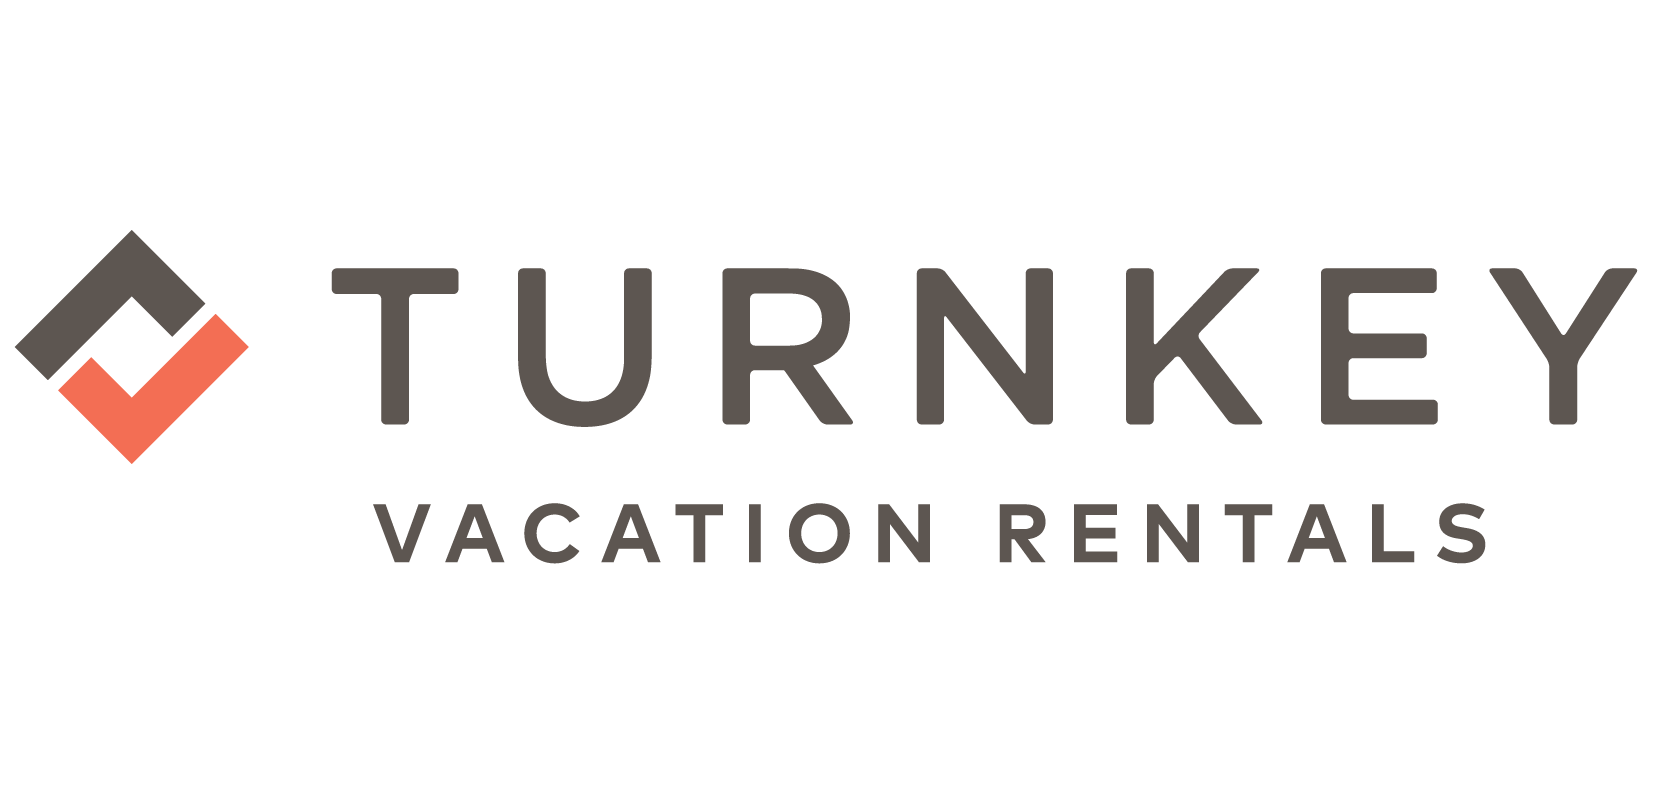 VRBO Logo - TurnKey Vacation Rentals. Premier Homes & Property Management